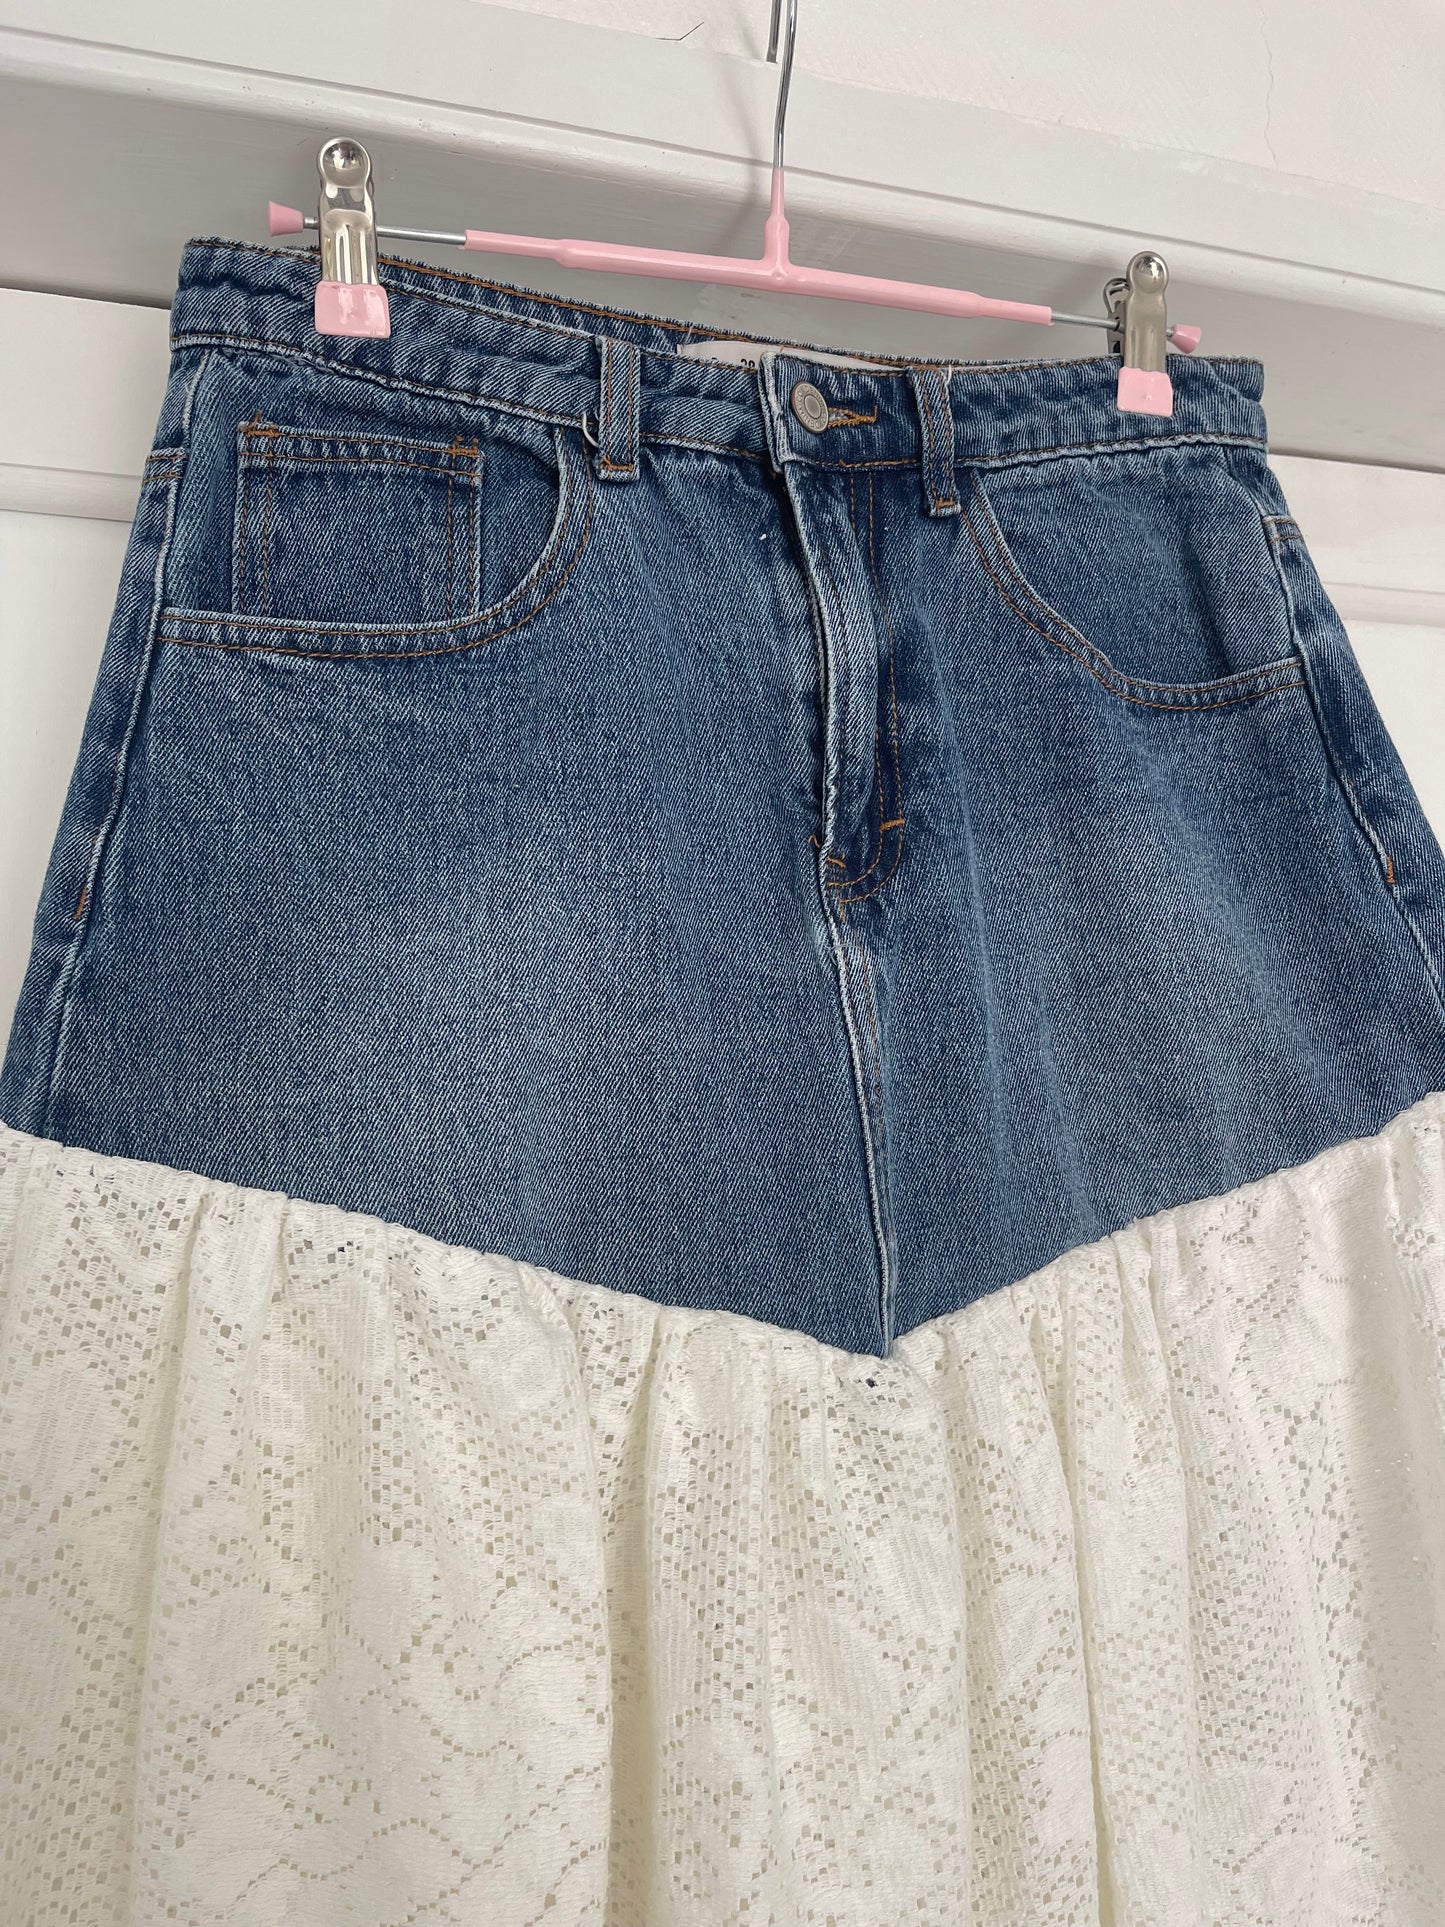 denim & lace upcycled skirt